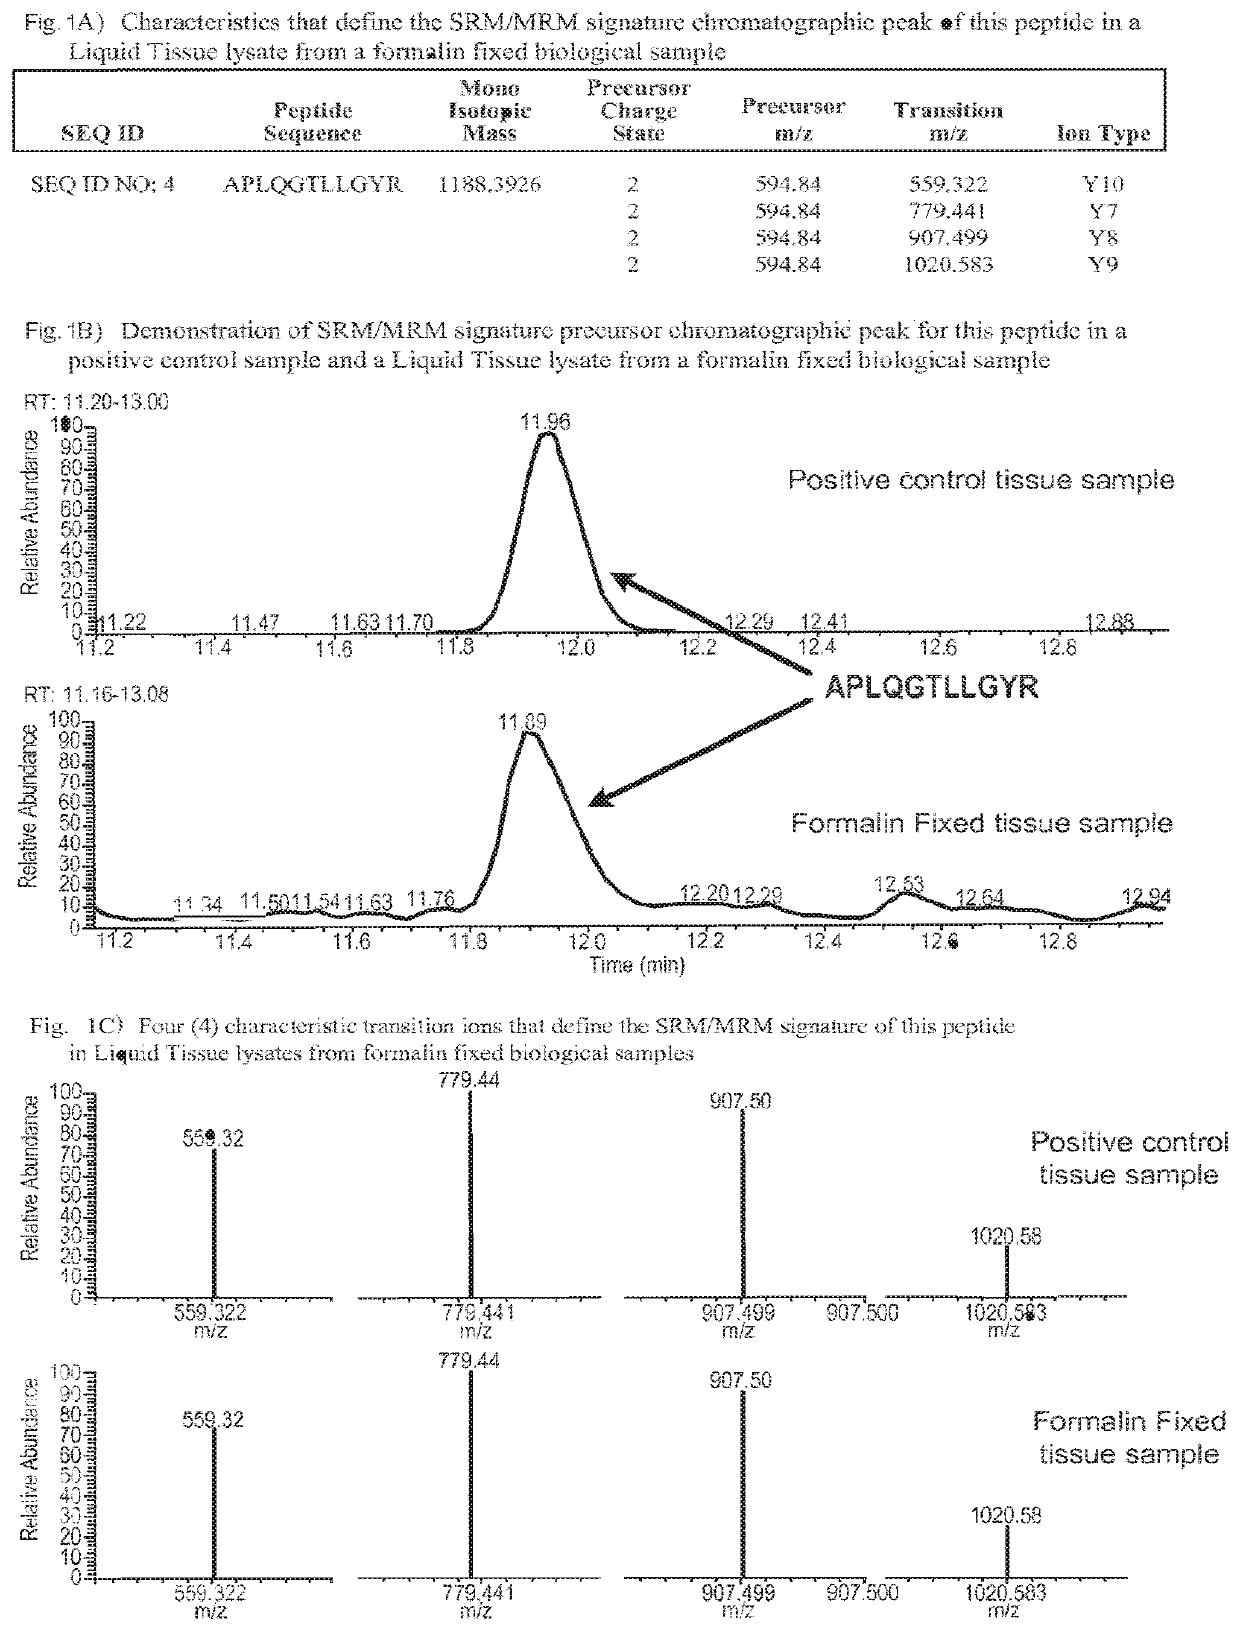 SRM/MRM assay for the tyrosine-protein kinase receptor UFO(AXL) protein